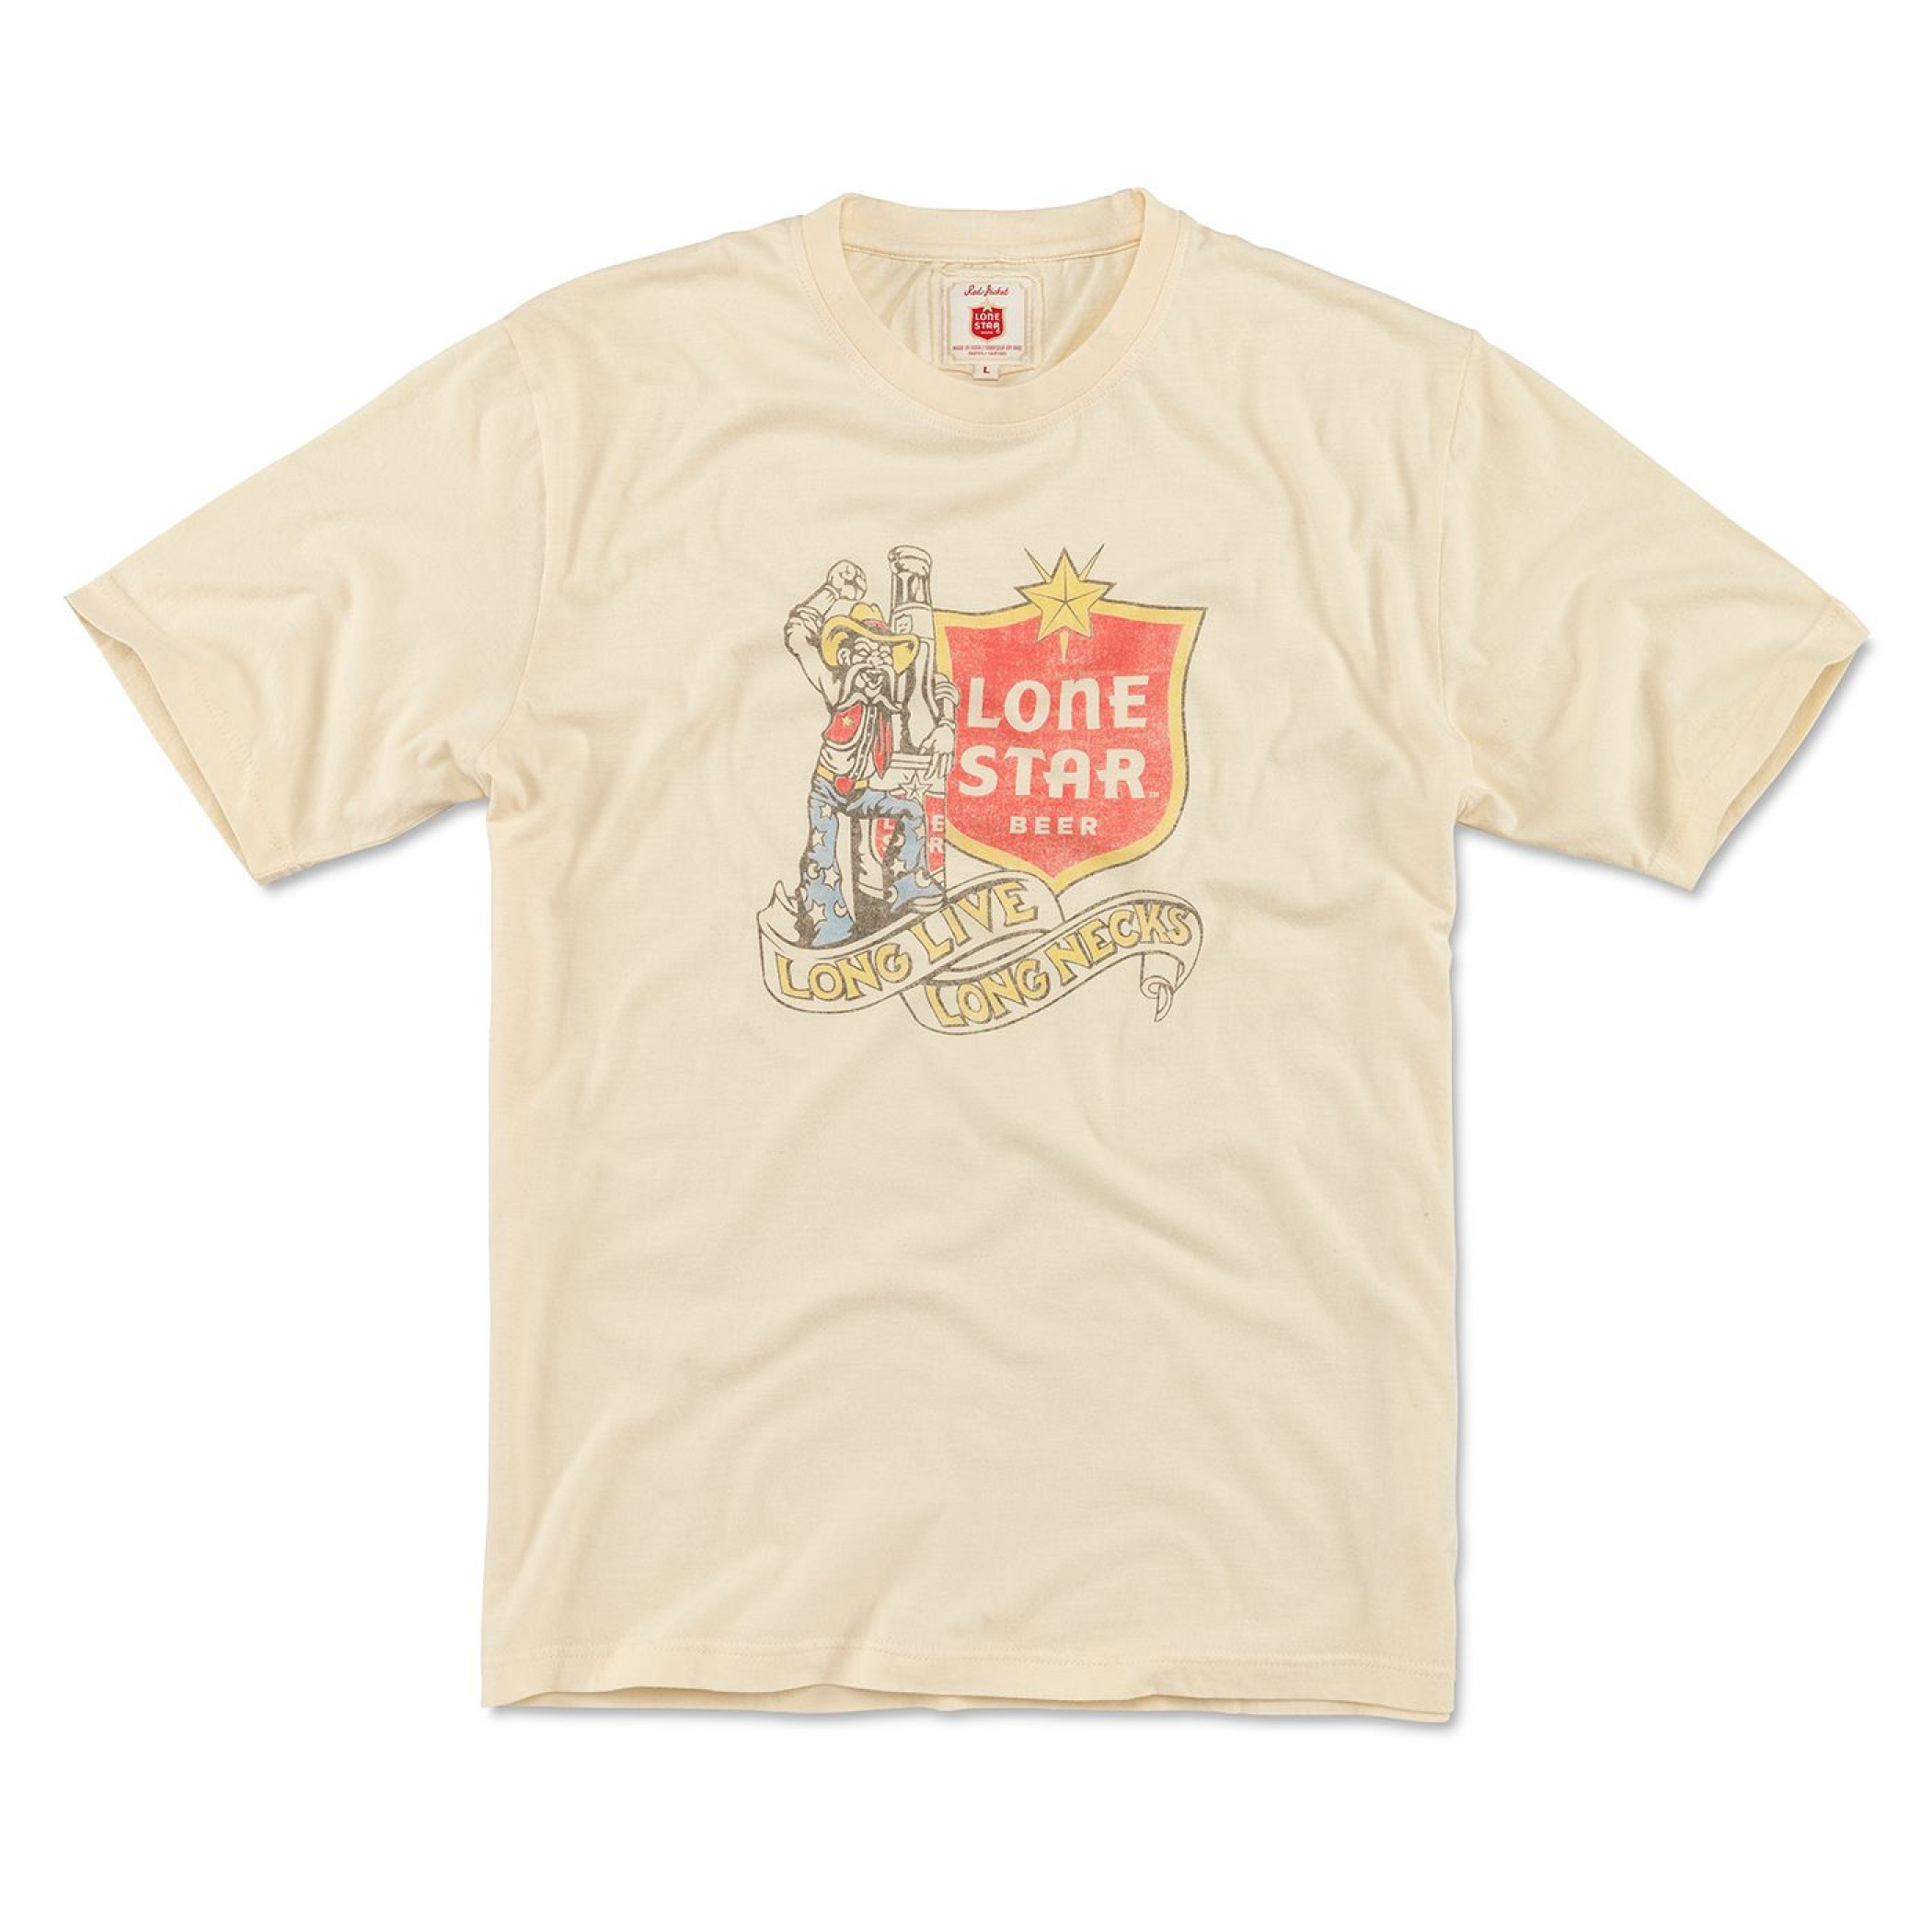 Lone Star Beer Long Live Long Necks T-Shirt